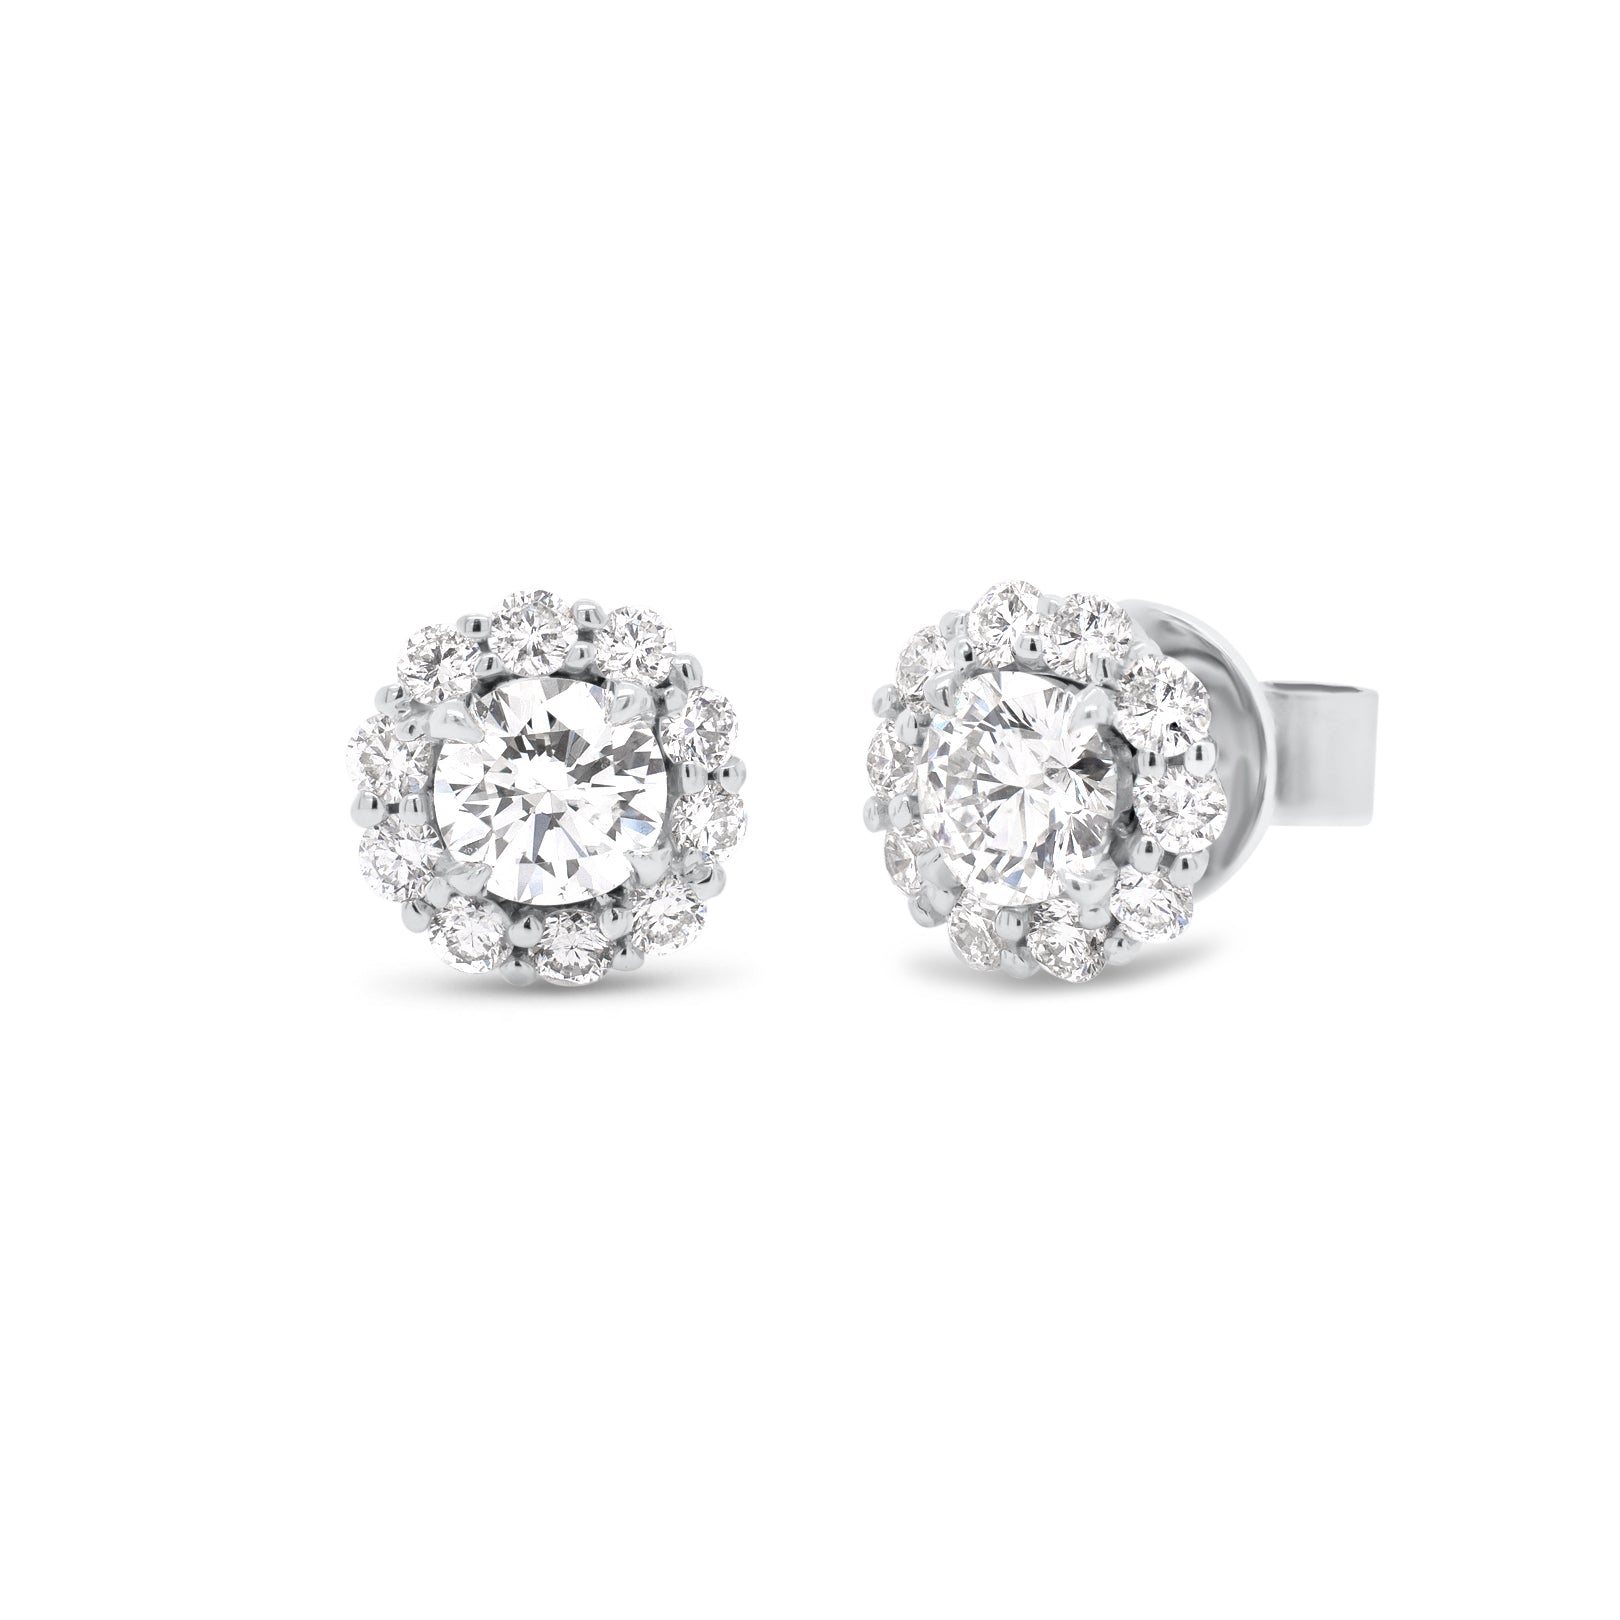 diamond halo stud earrings - 18K gold weighing 2.95 grams  - 20 round diamonds totaling 0.51 carats  - 2 round diamonds totaling 0.78 carats